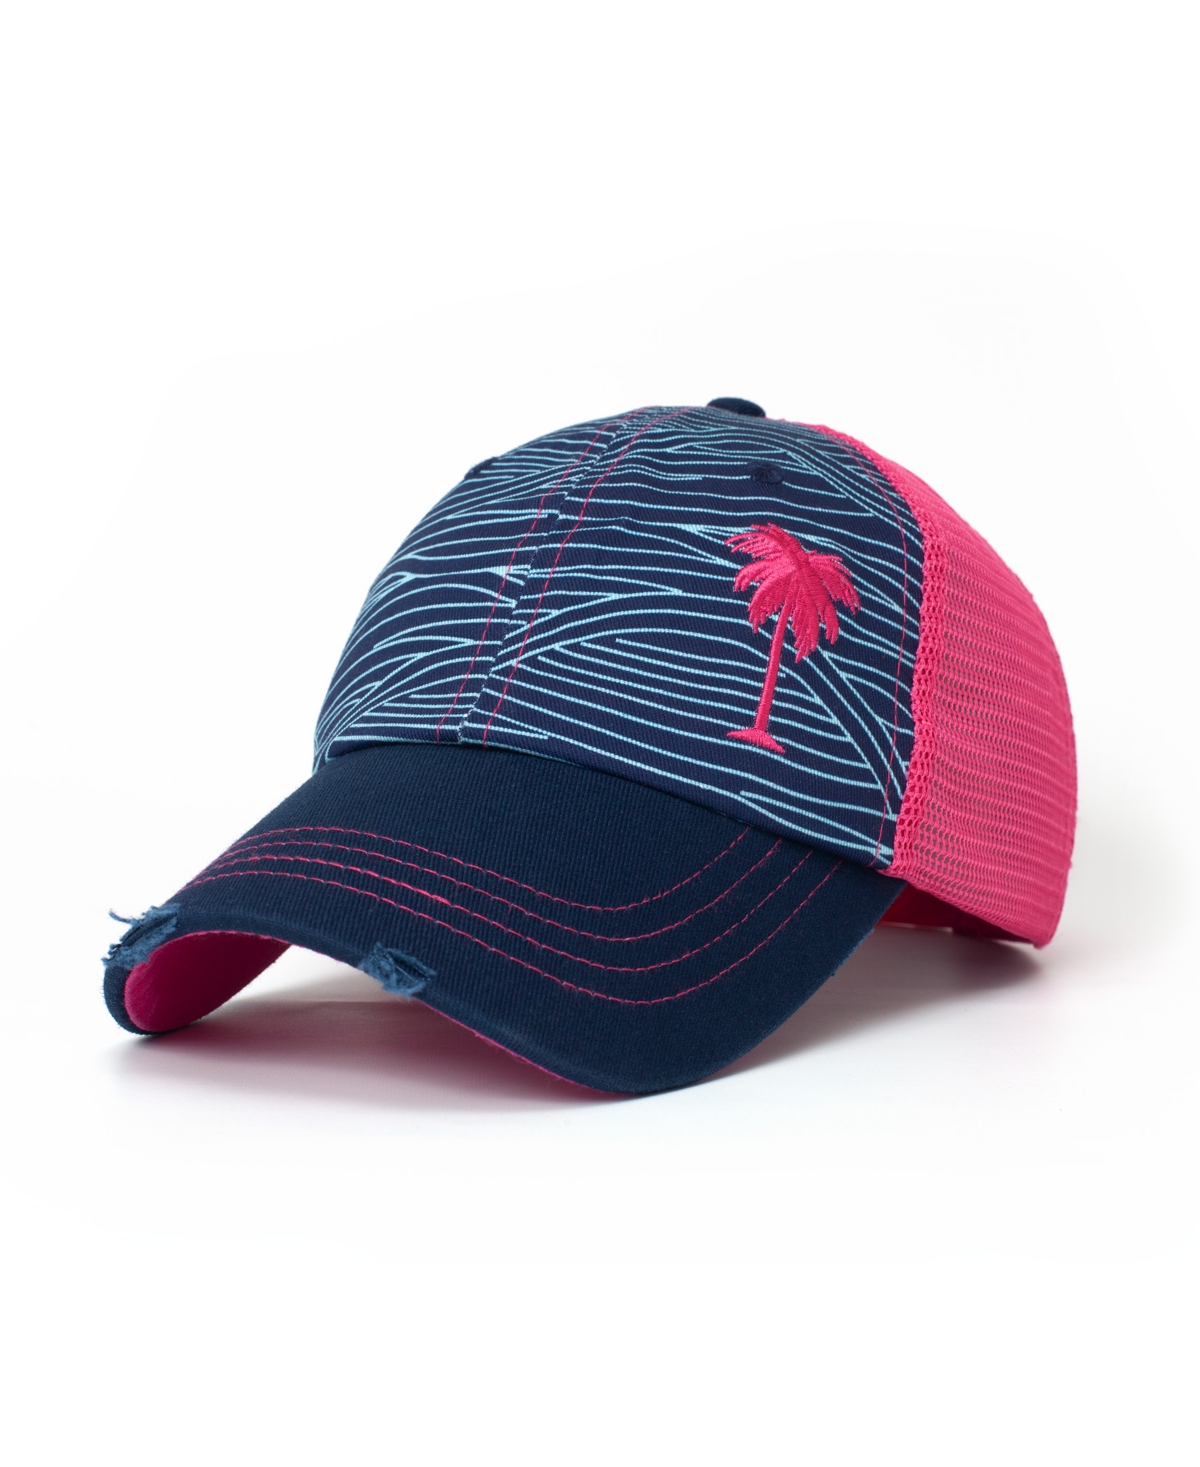 Women's Adjustable Snap Back Mesh Palm Tree Trucker Hat - Pink, Blue